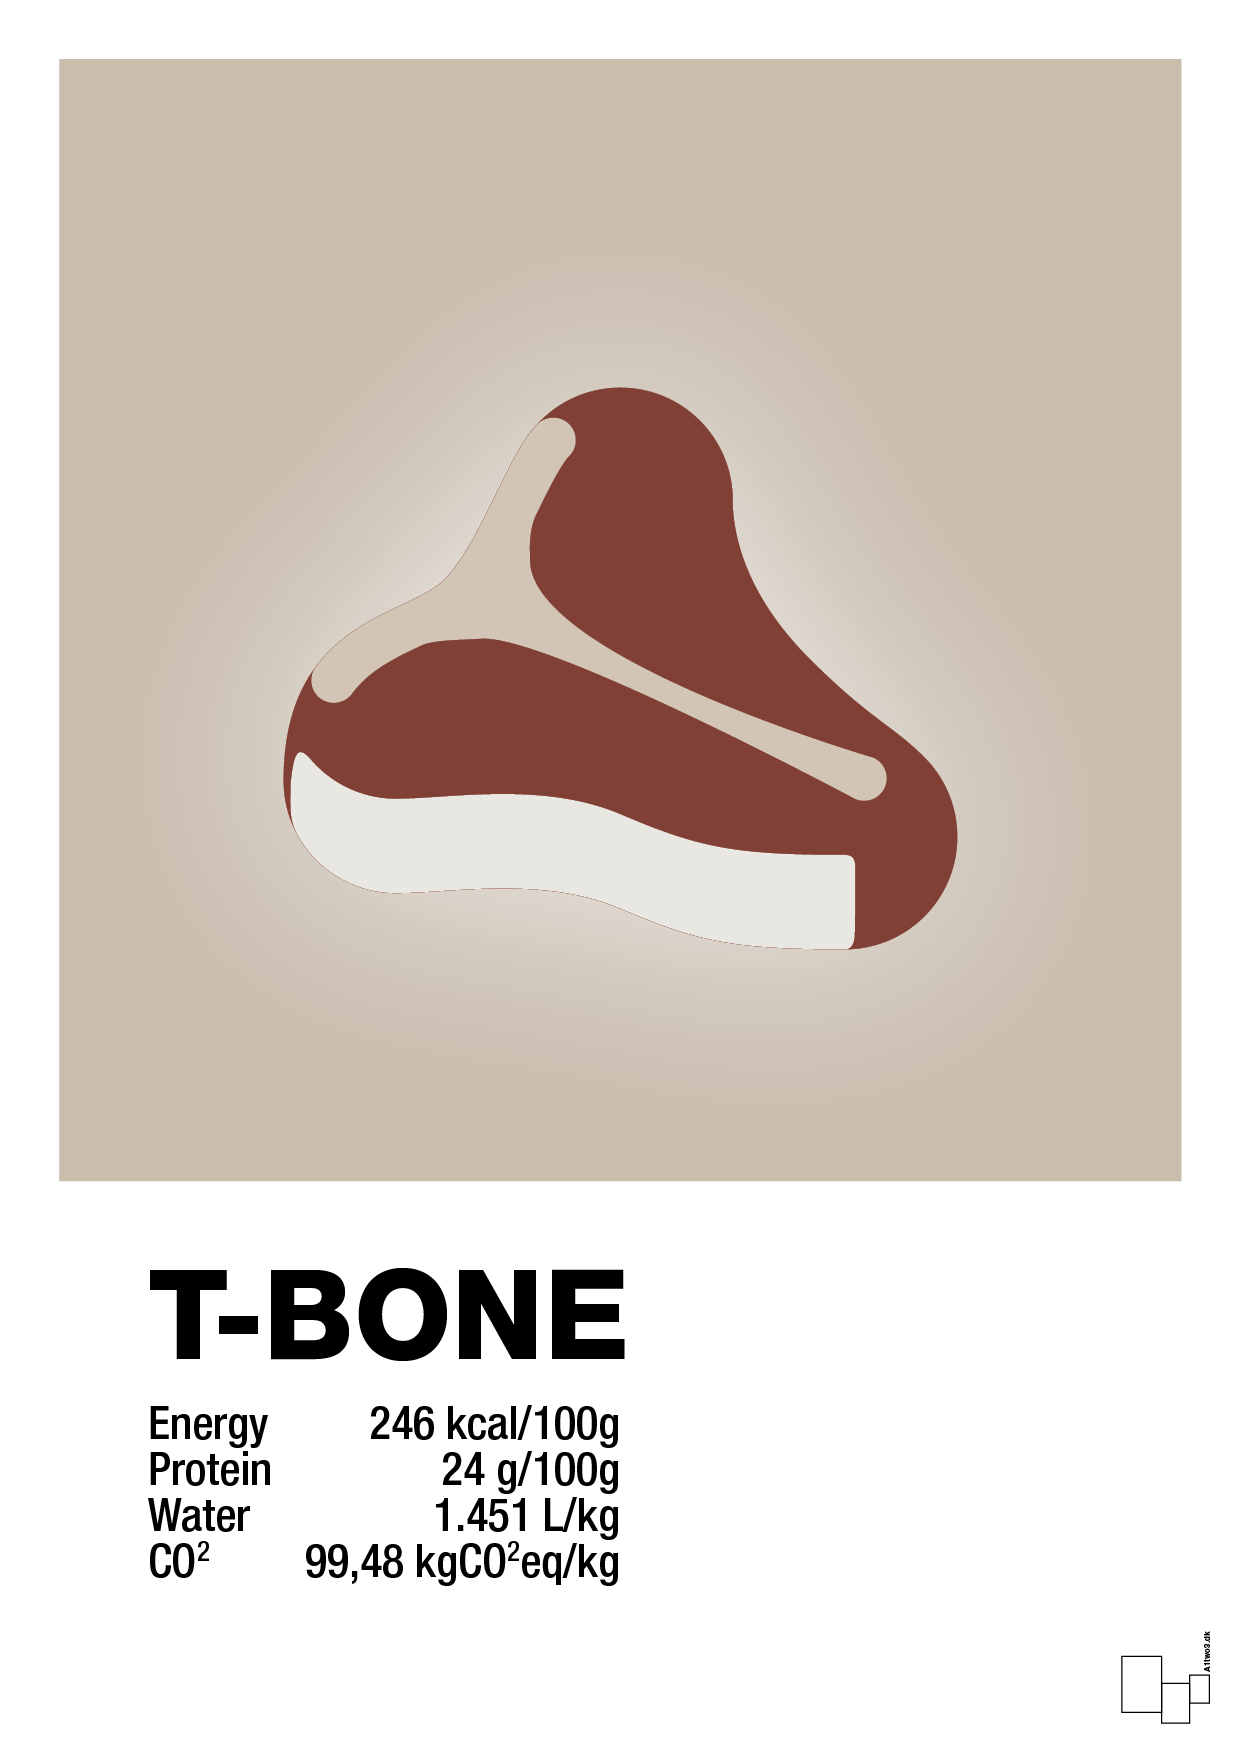 t-bone nutrition og miljø - Plakat med Mad & Drikke i Creamy Mushroom